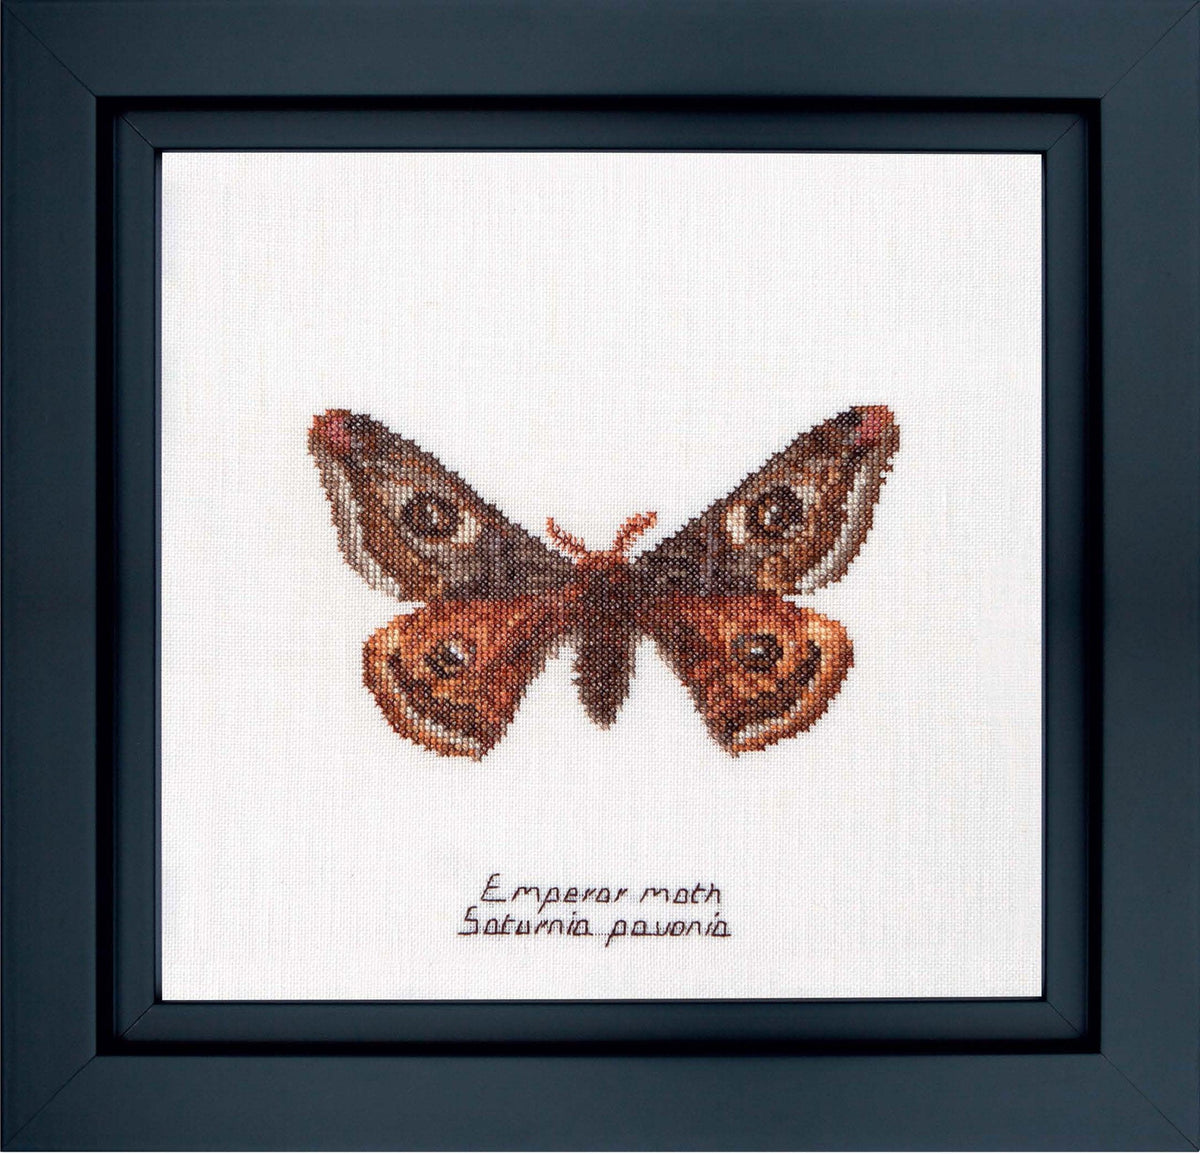 Thea Gouverneur - Counted Cross Stitch Kit - Emperor moth - Aida - 16 count - 562A - Thea Gouverneur Since 1959